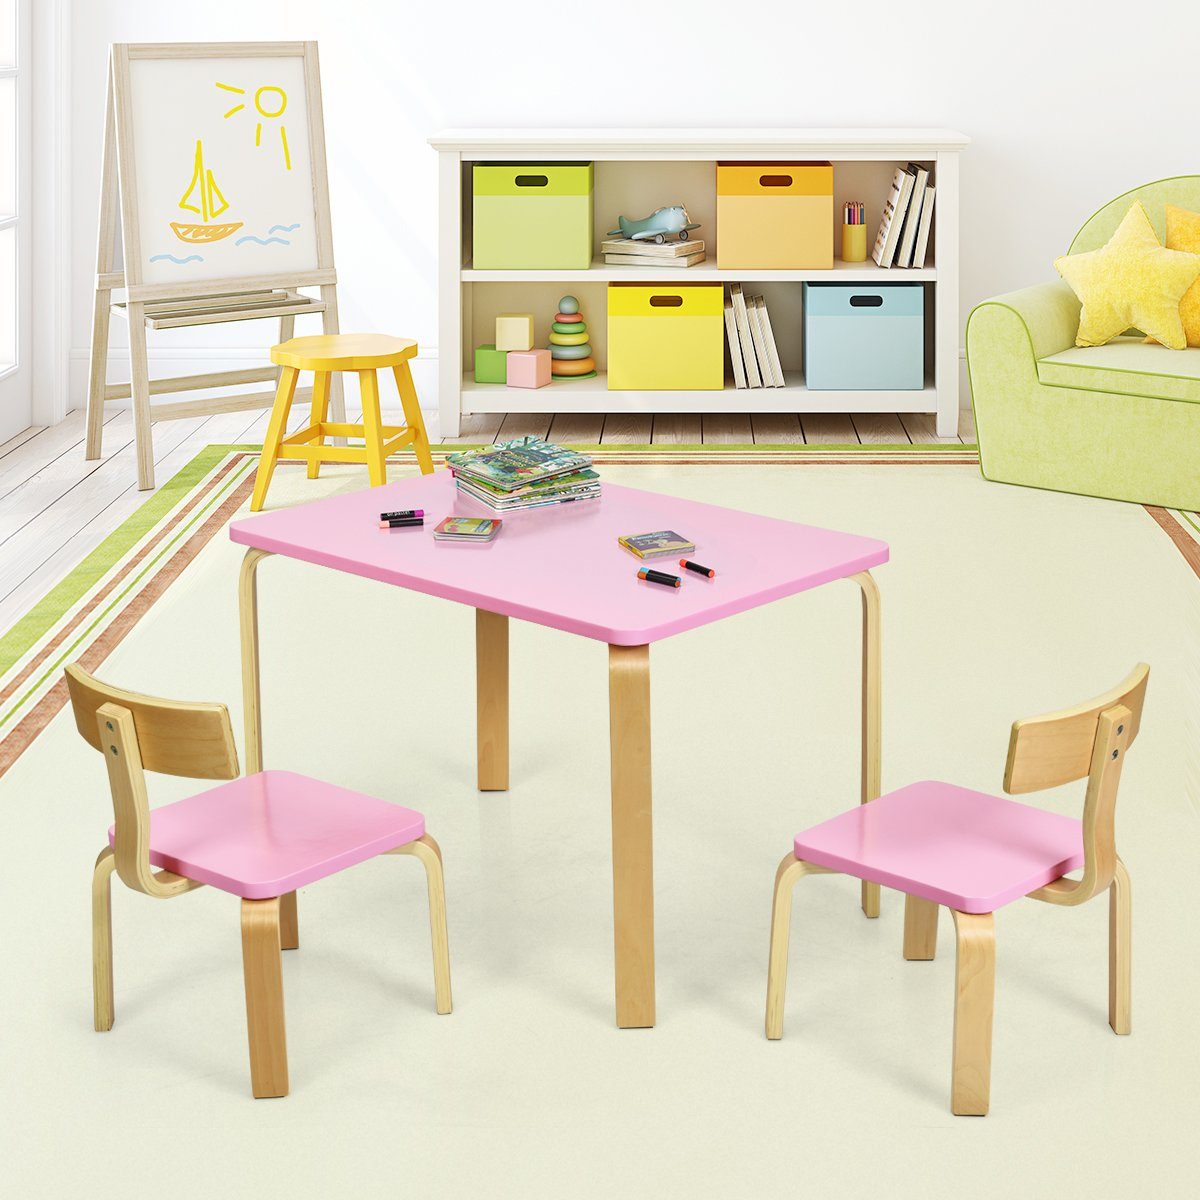 Kinderstühlen, Kindersitzgruppe, Kindertisch Rosa 2 Holz mit COSTWAY